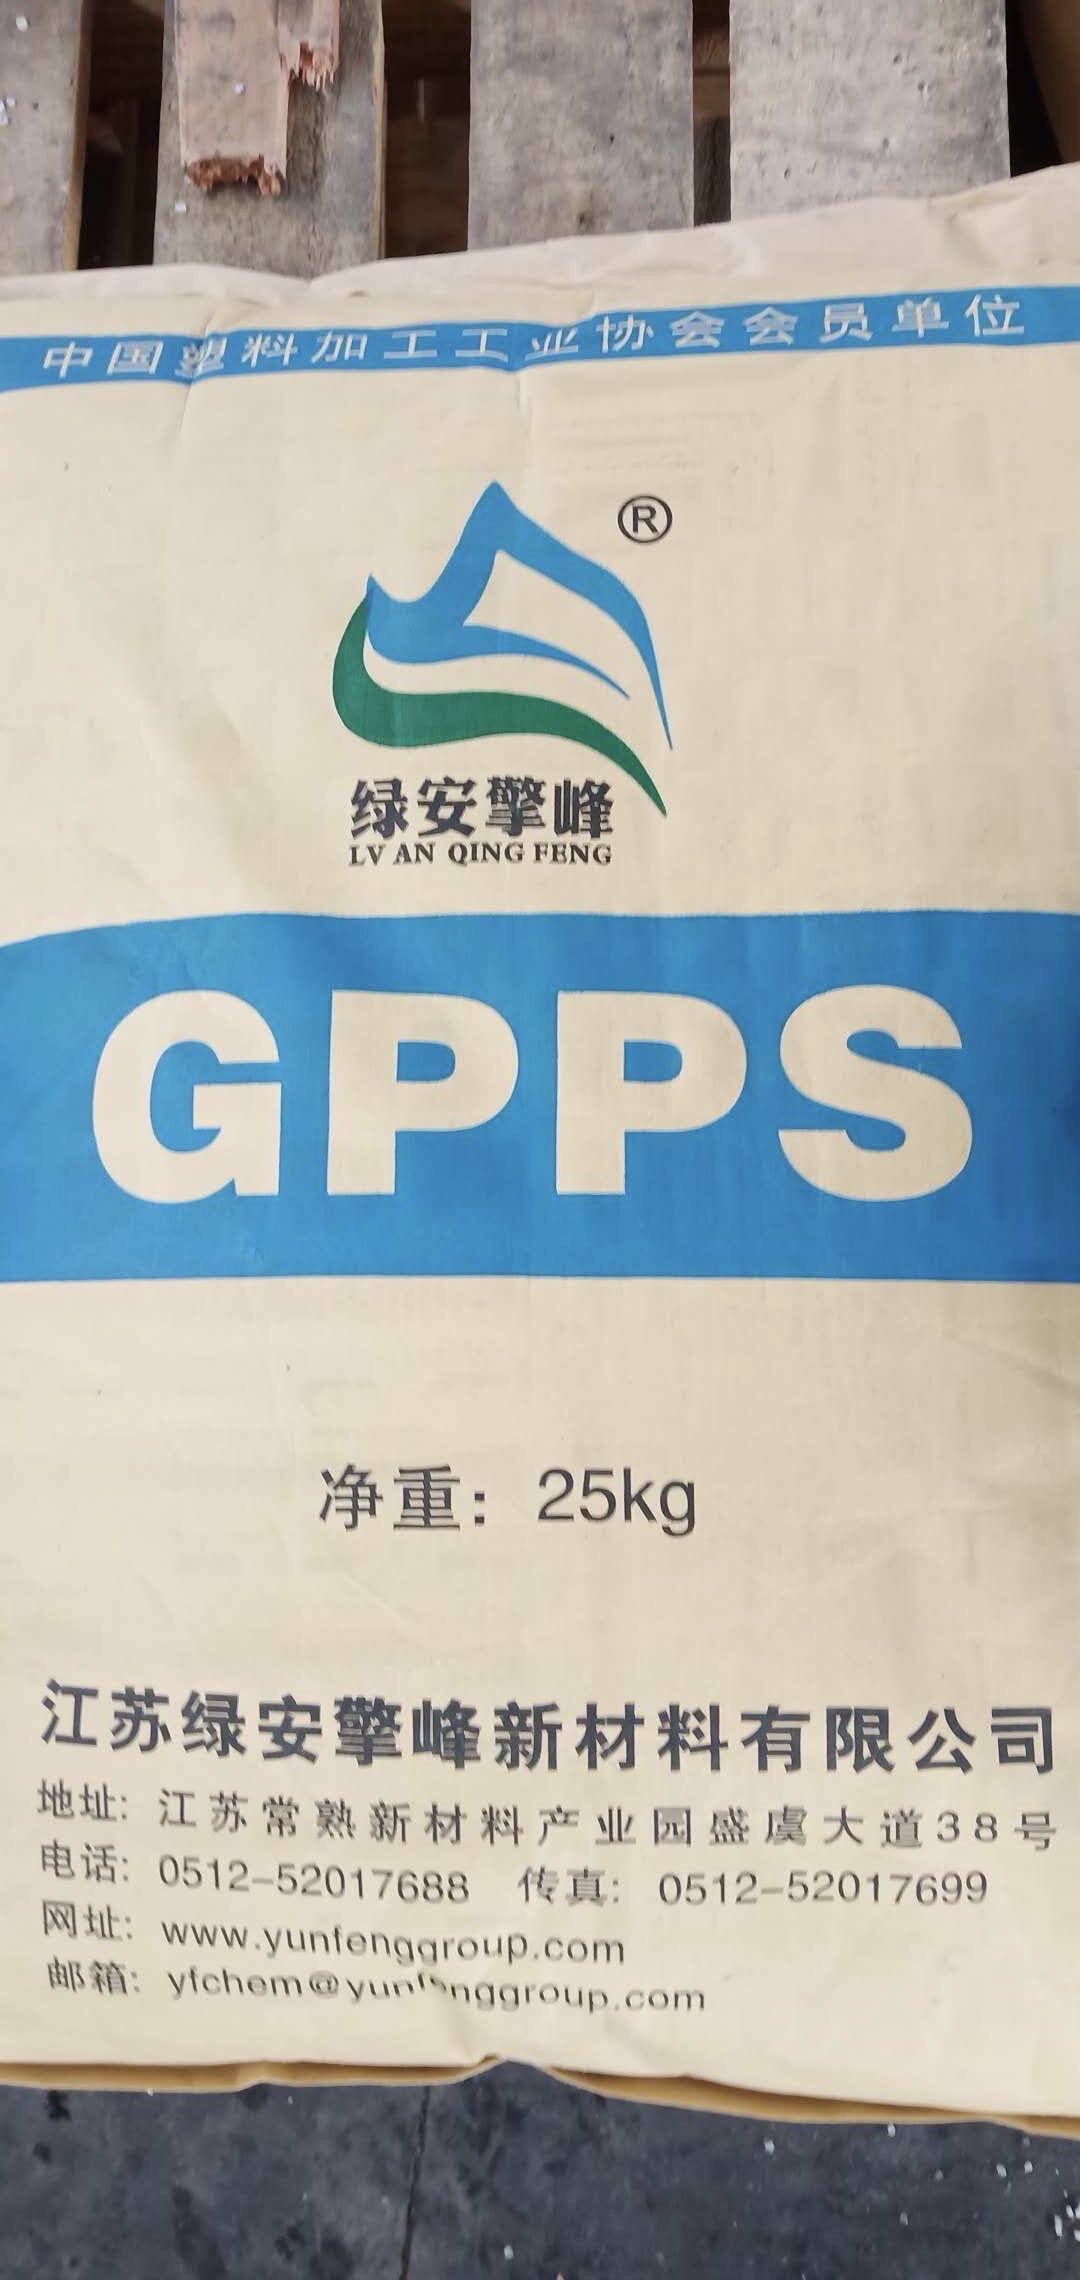 GPPS 绿安擎峰 GP-525 透明级3